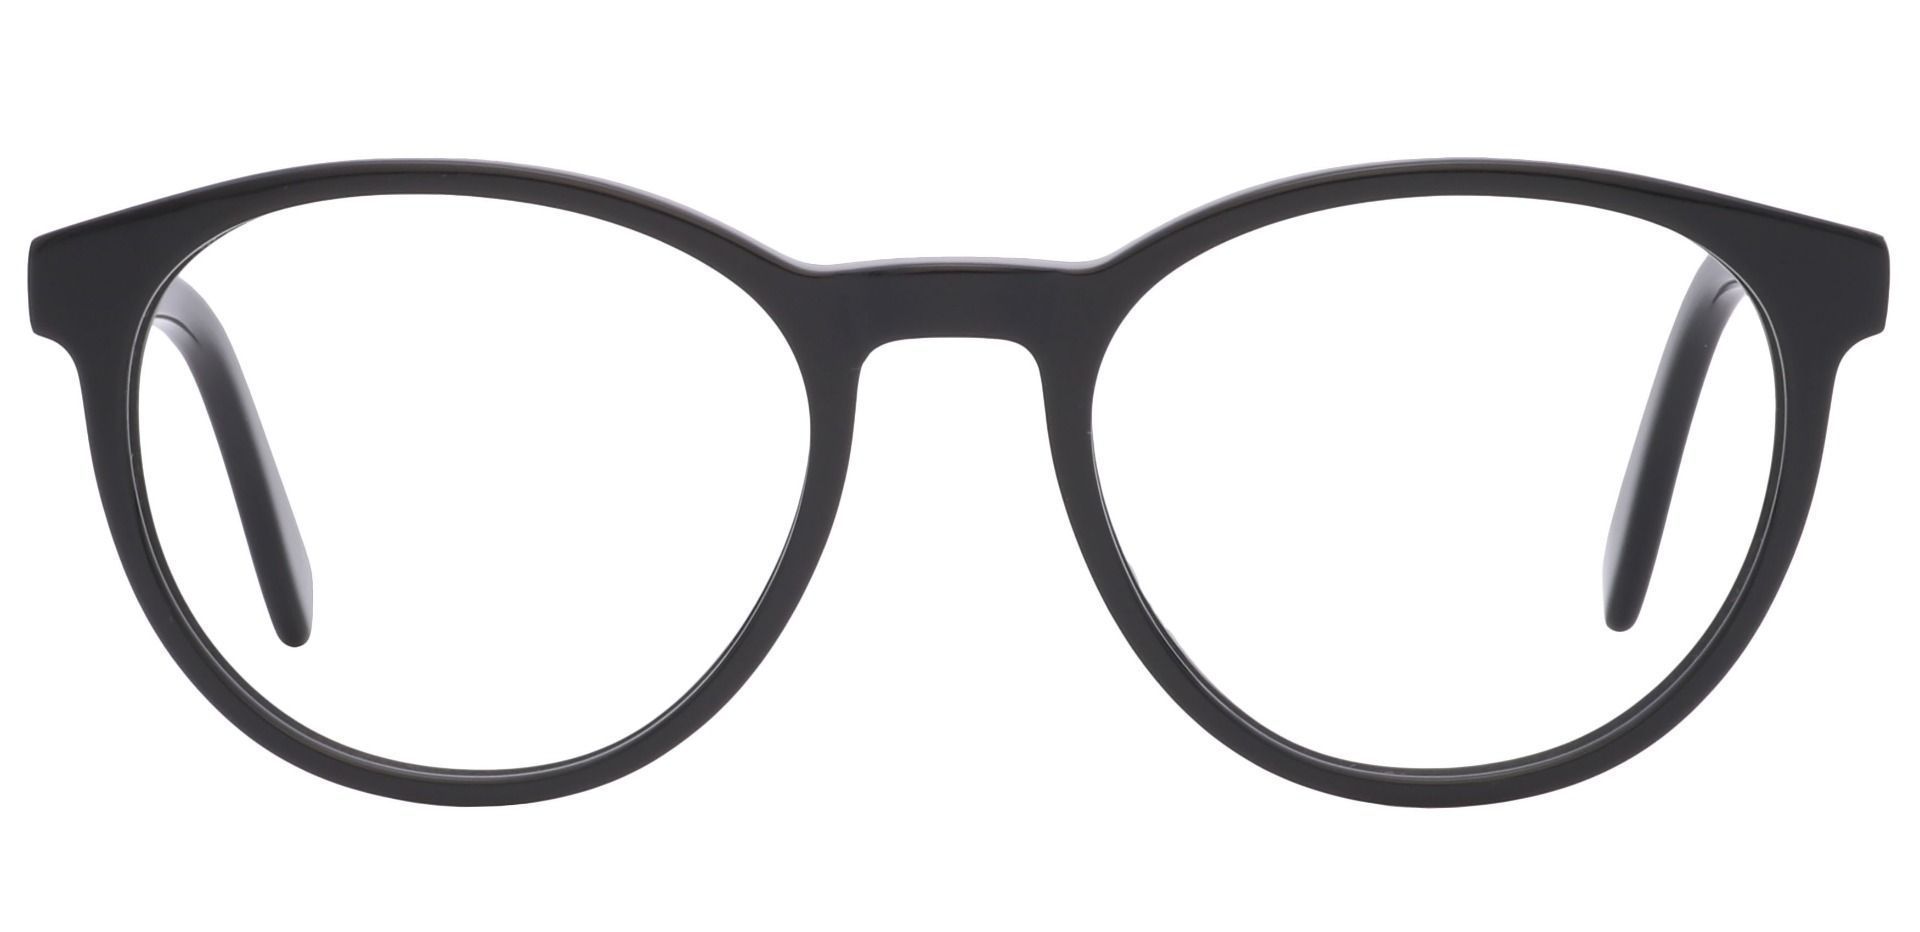 Stellar Oval Eyeglasses Frame - Black